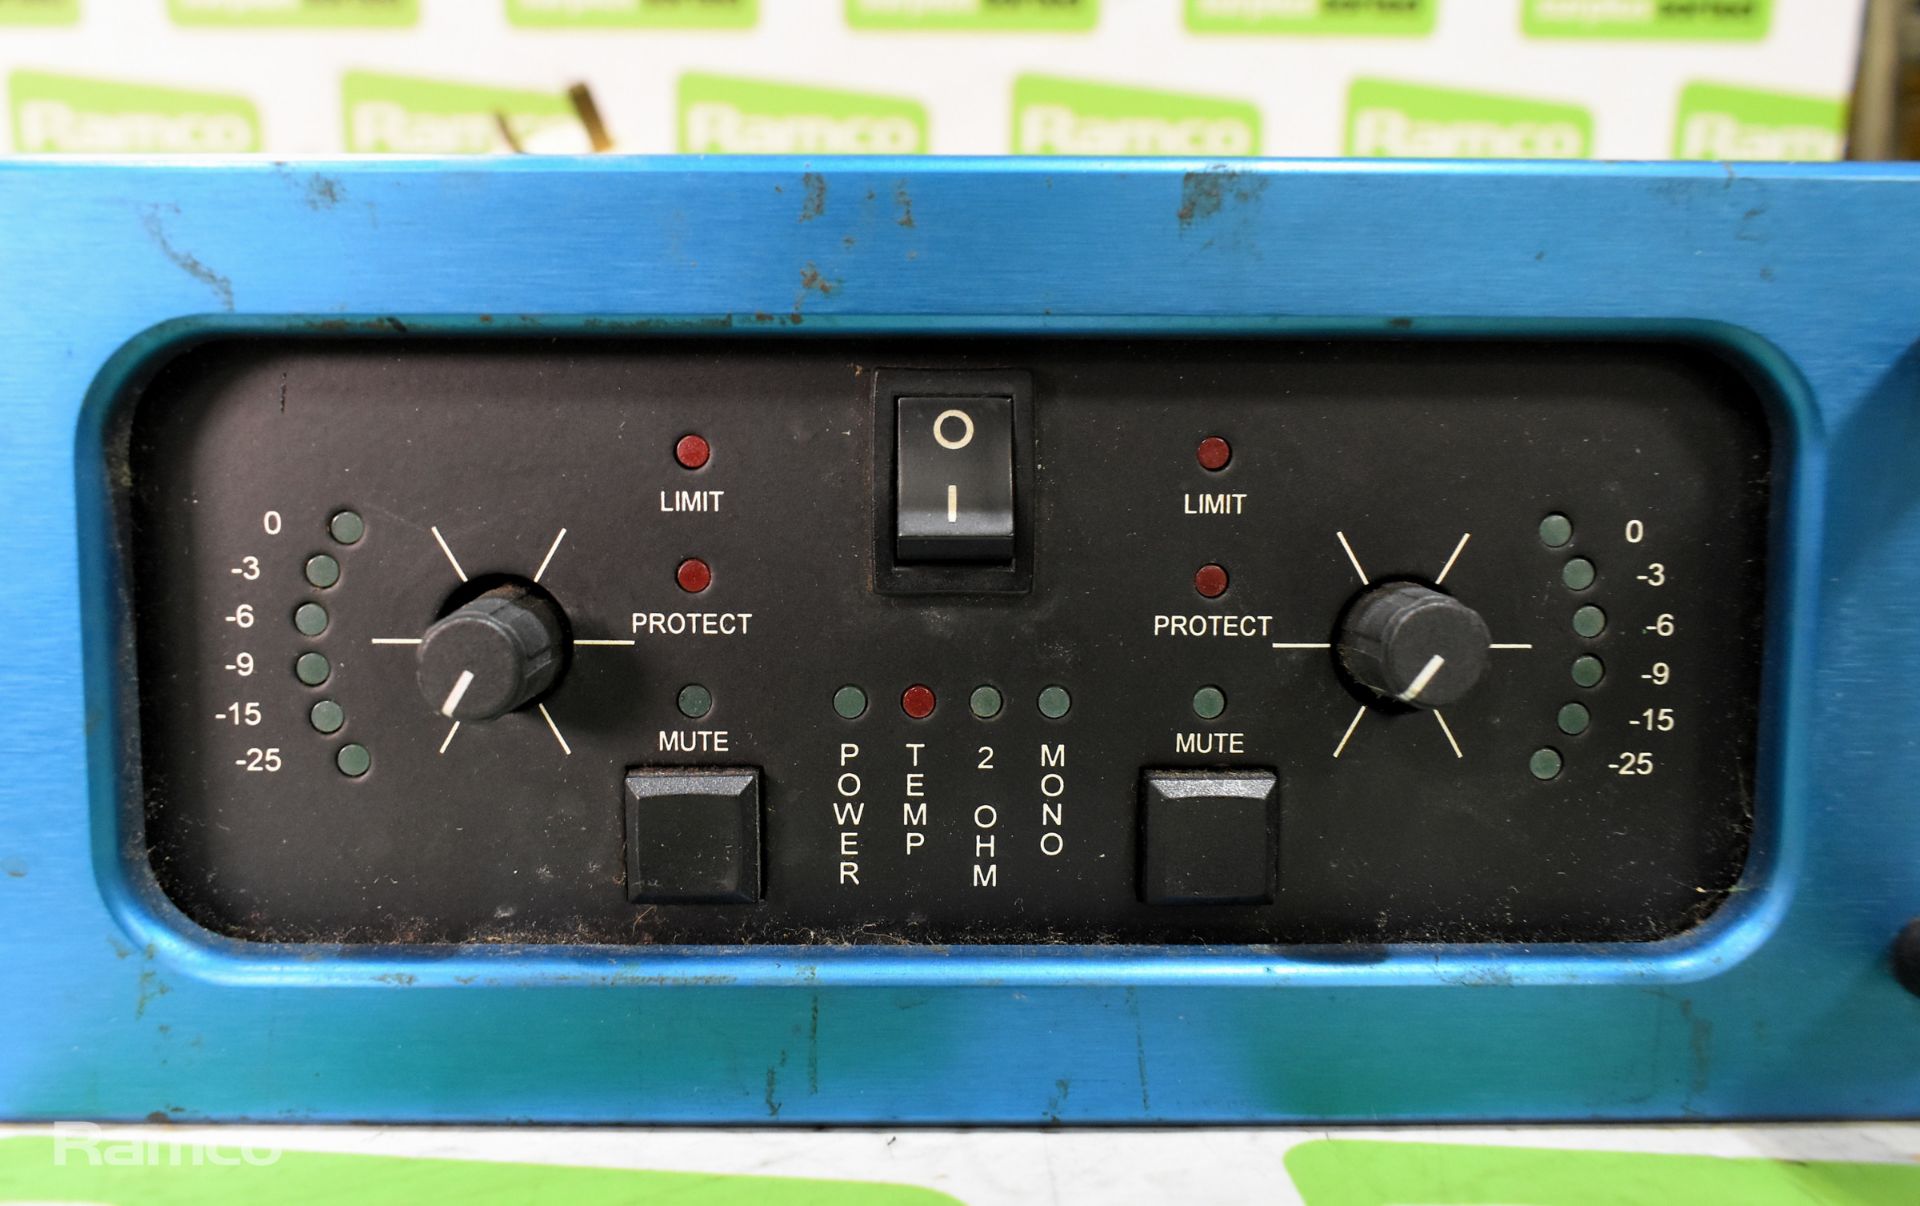 MC2 MC750 amplifier - 625 watts per channel into 8 Ohms (stereo) - 2150 watts into 8 Ohms (mono) - Image 2 of 4